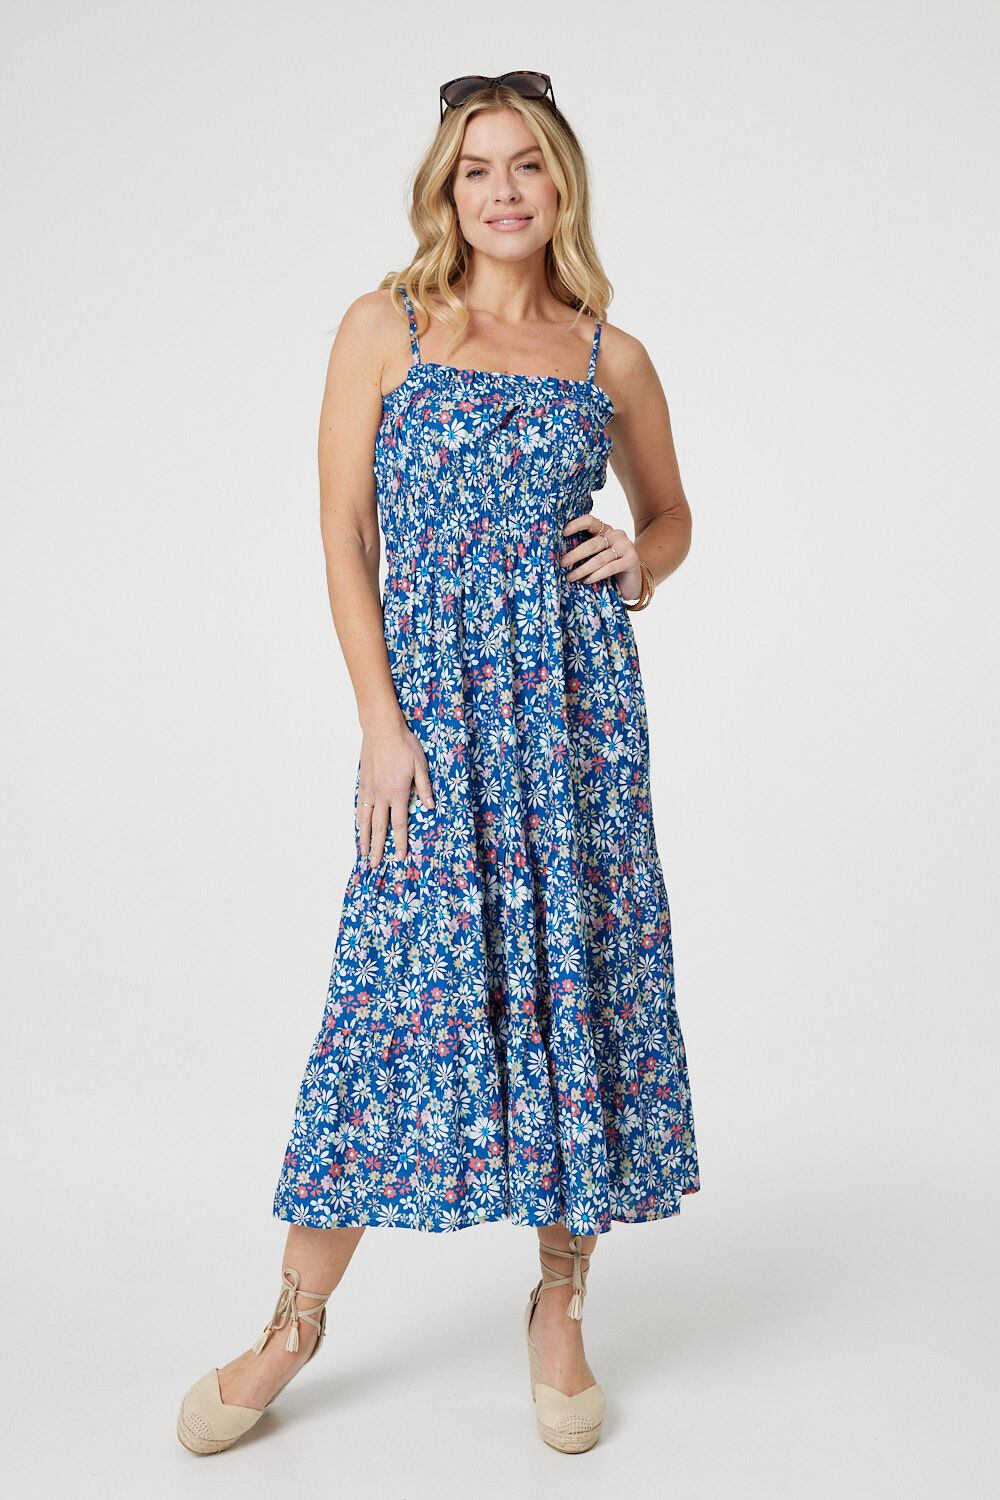 Izabel London Blue - Floral Sleeveless Midi Sun Dress, Size: 18